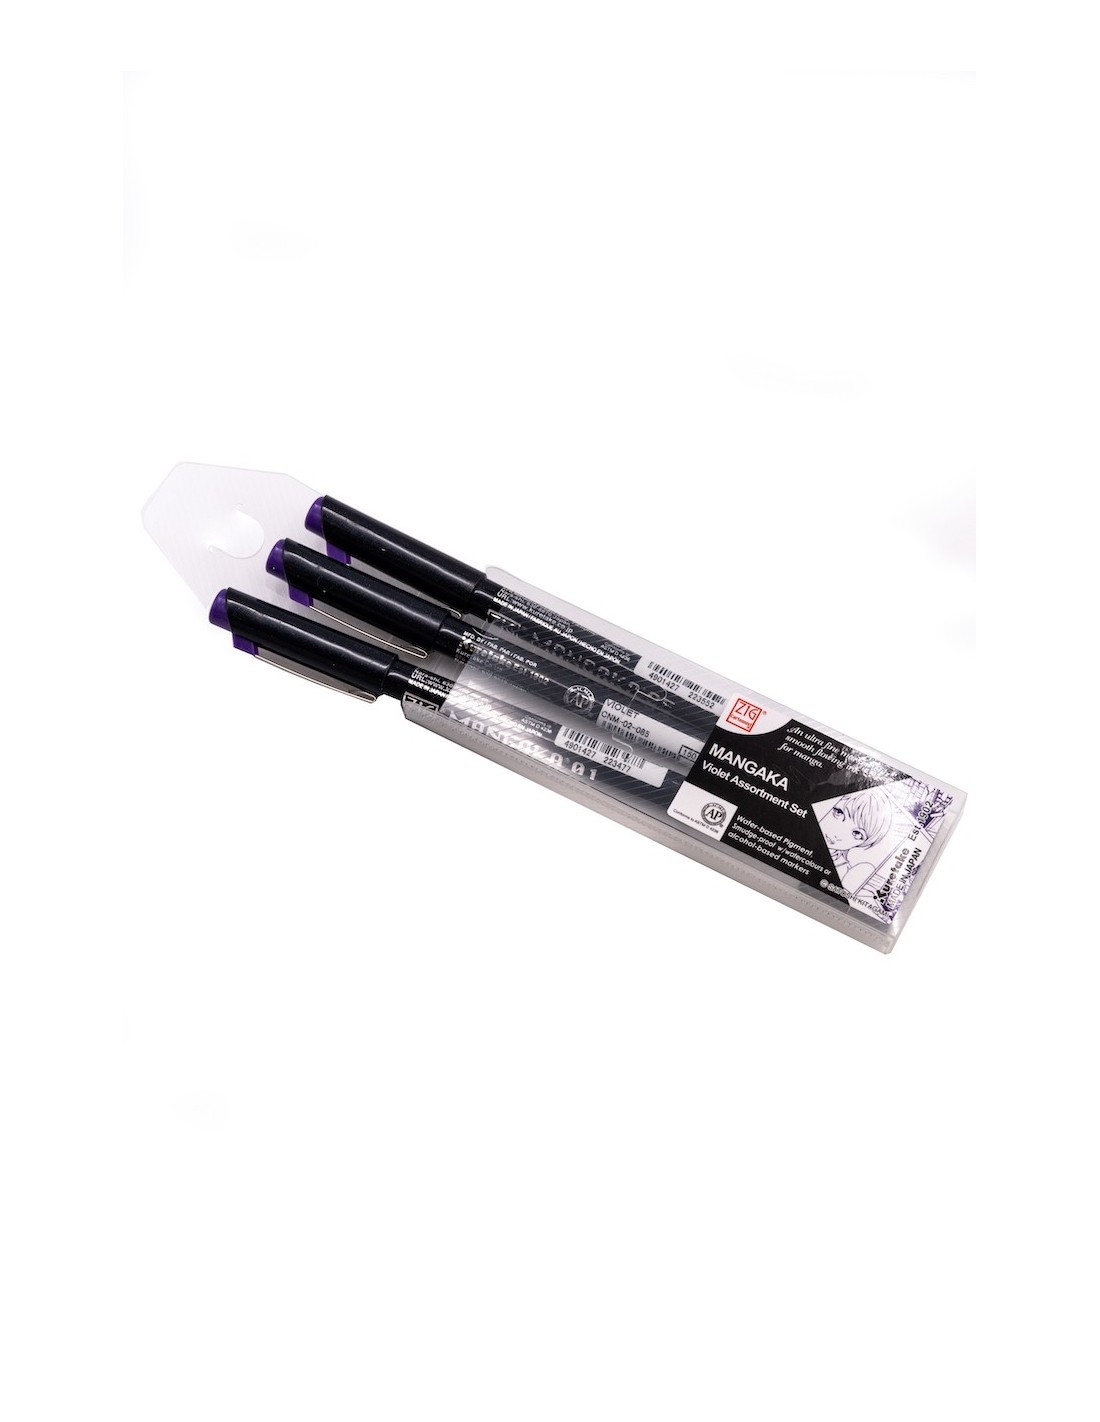 Kuretake Japanese Manga Pen Viola - pack of 3 pens with tips of